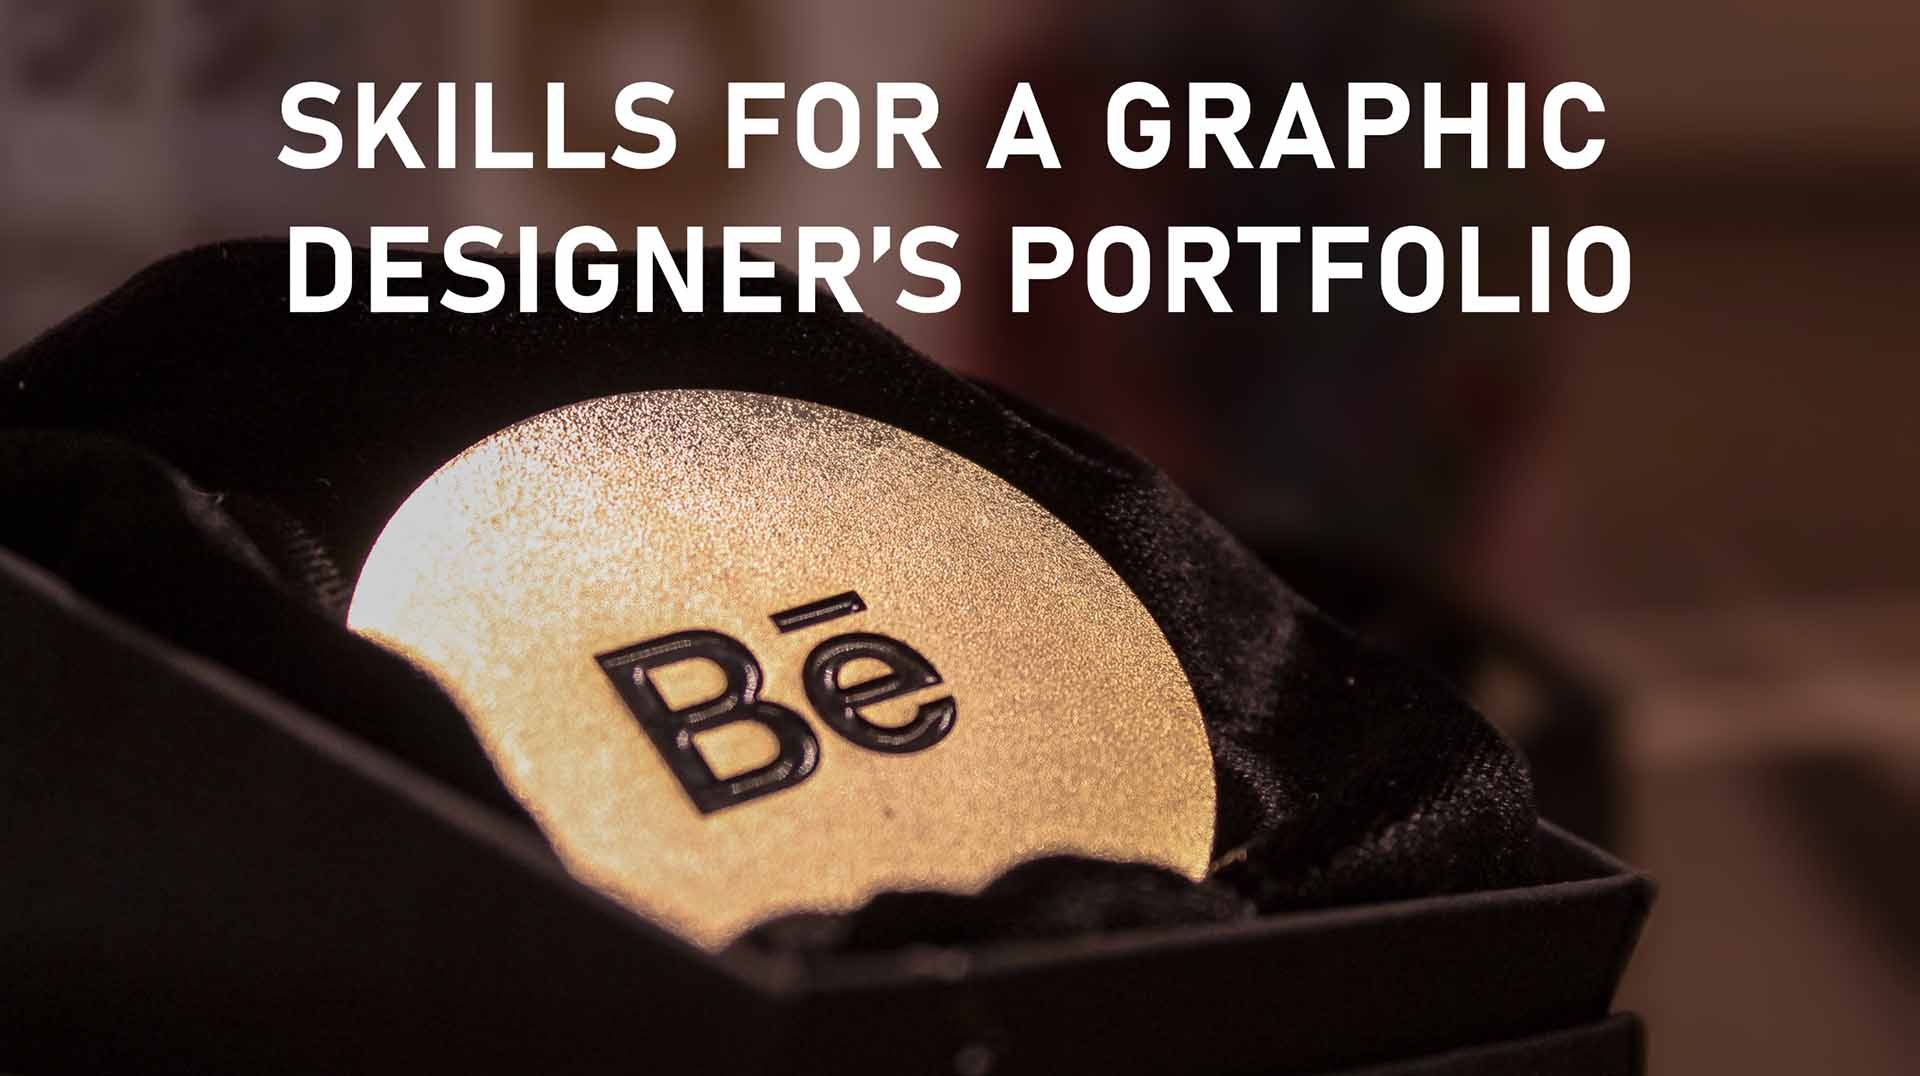 grapgic-designer-portfolio-skills